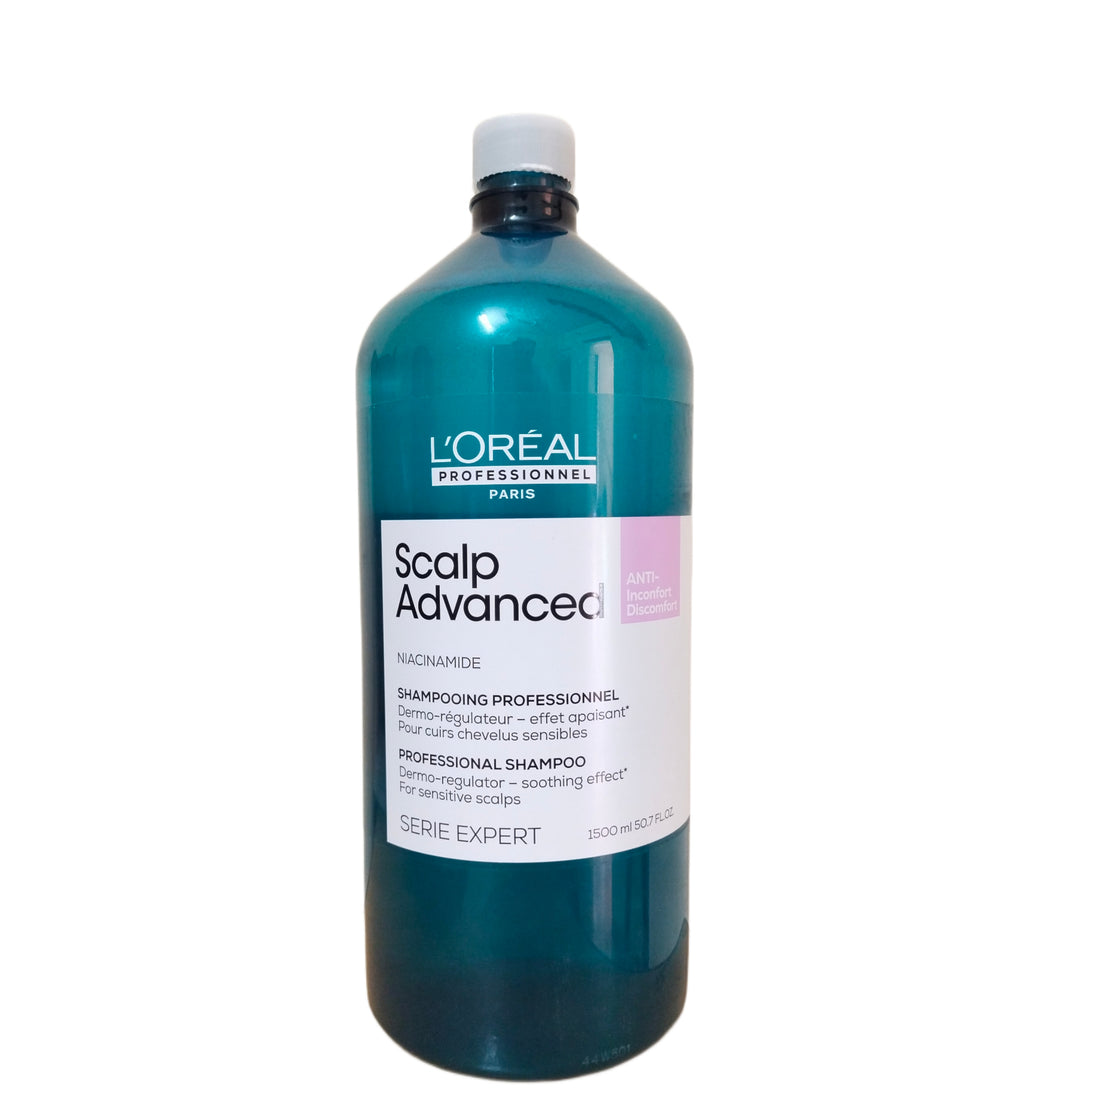 Loreal Instant Clear Pure Shampoo Formerly Scalp Advanced Anti-Dandruff Dermo Clarifier 1500ml